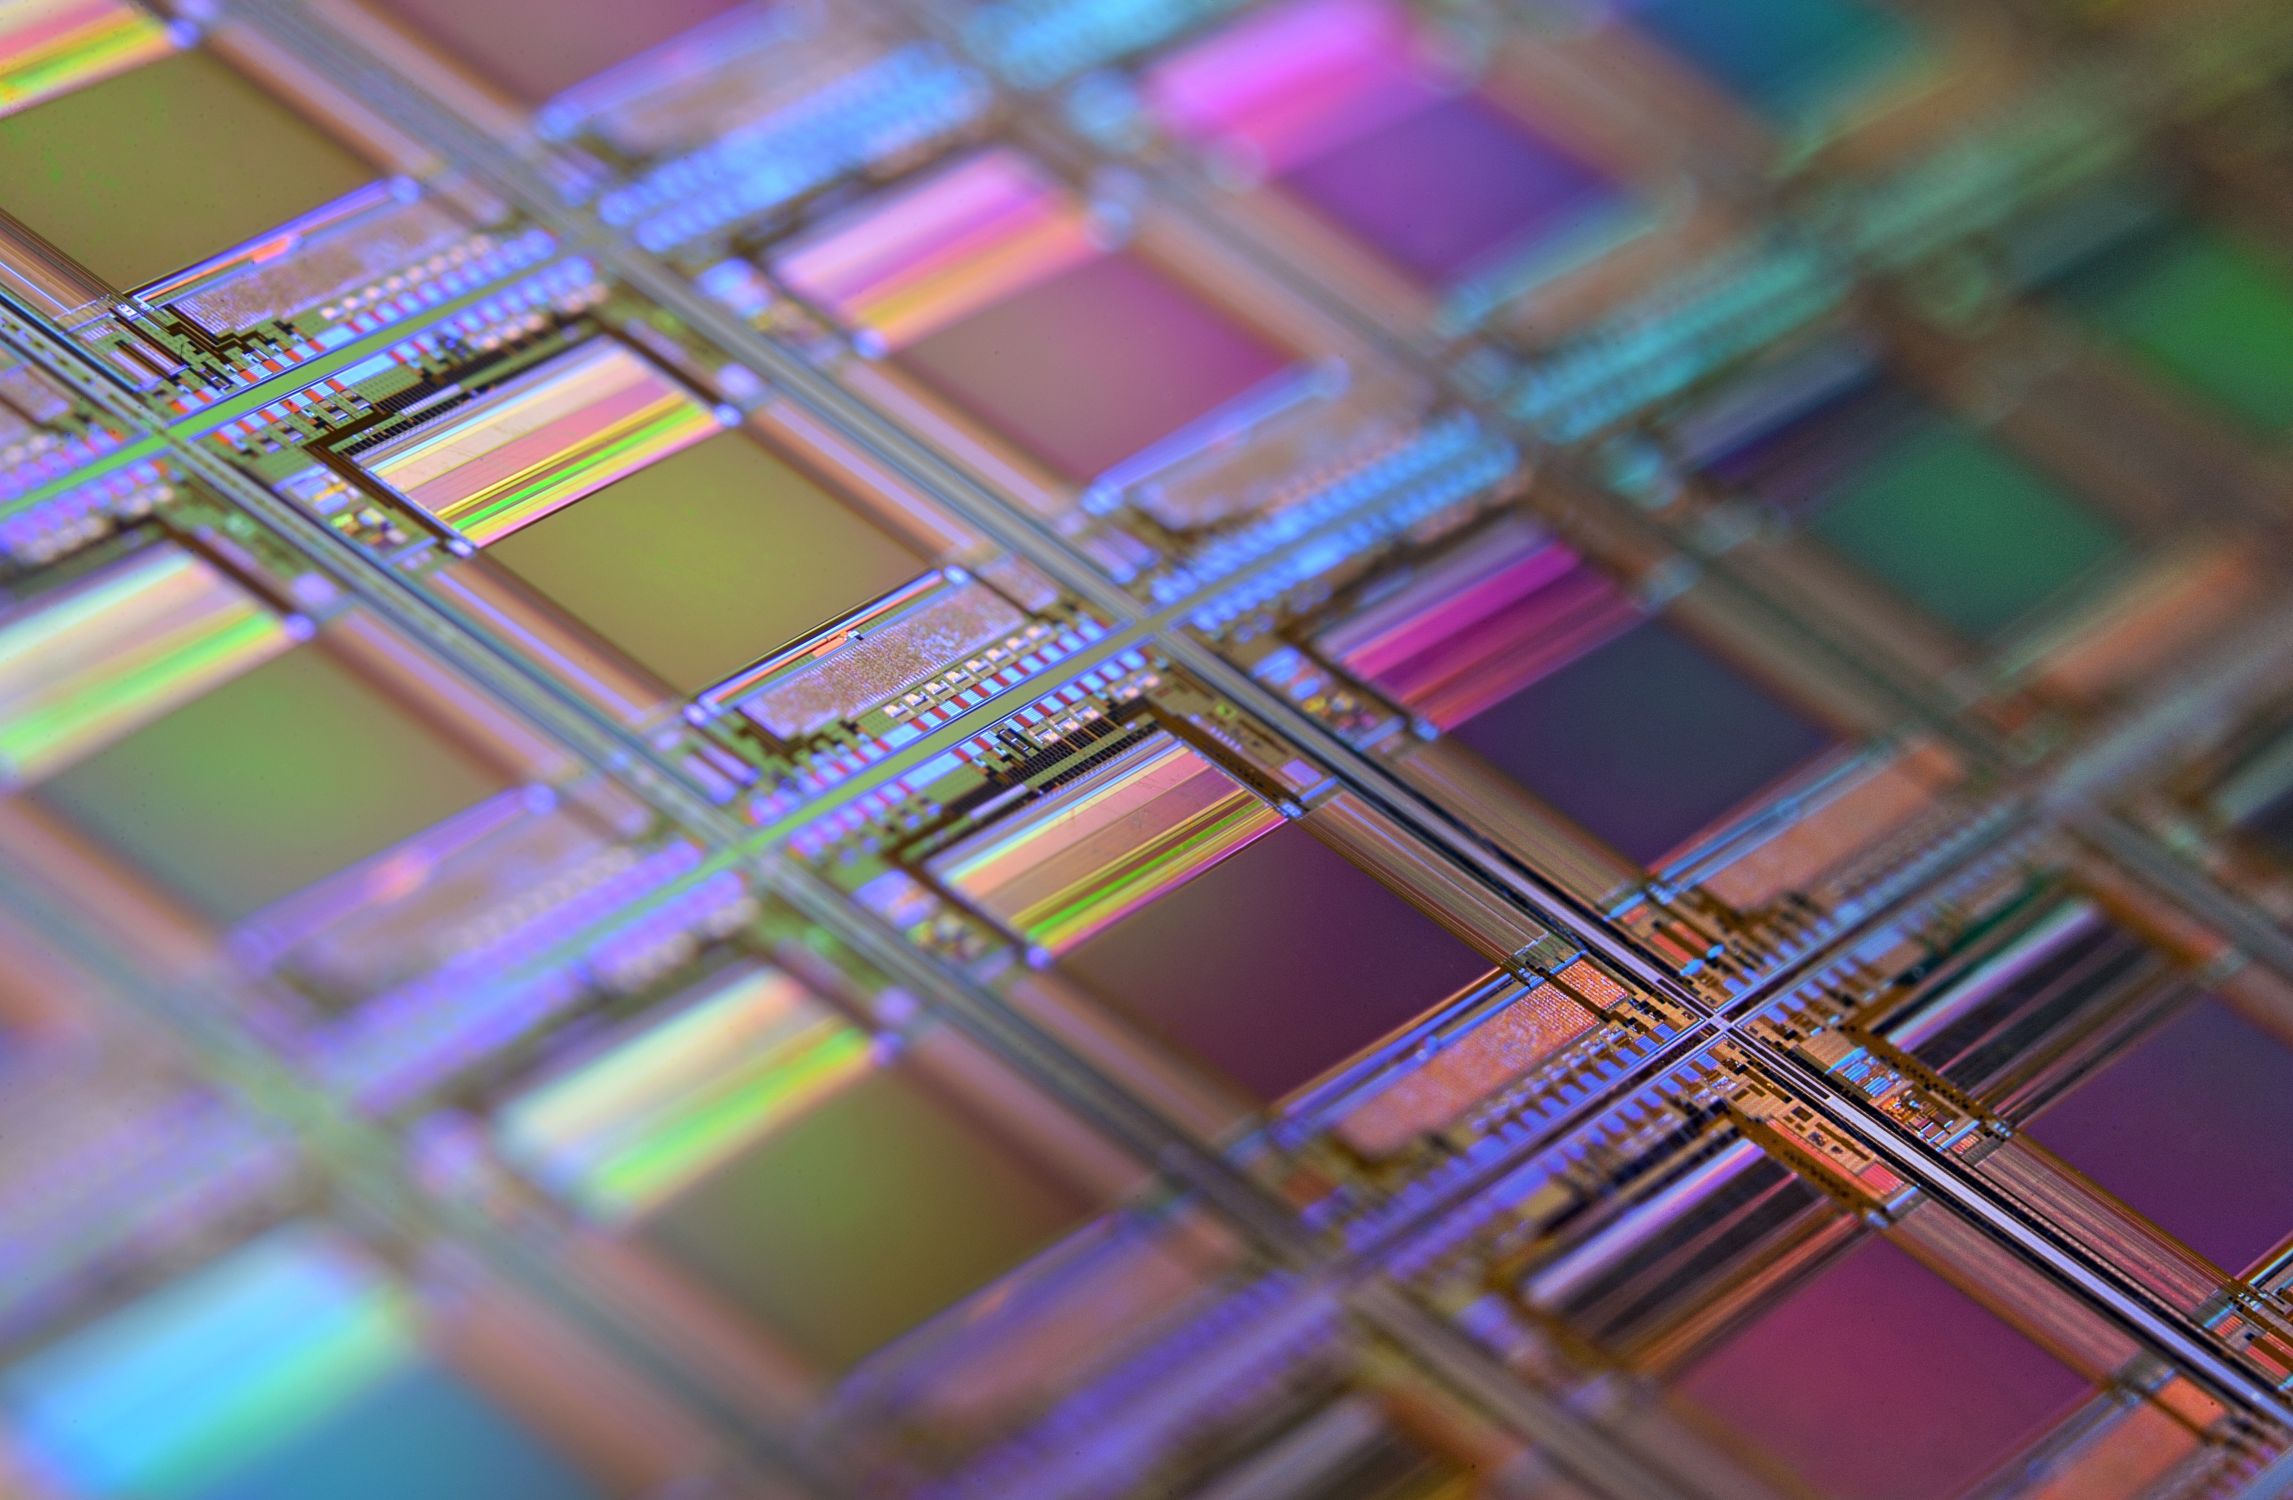 Biggest computer chip